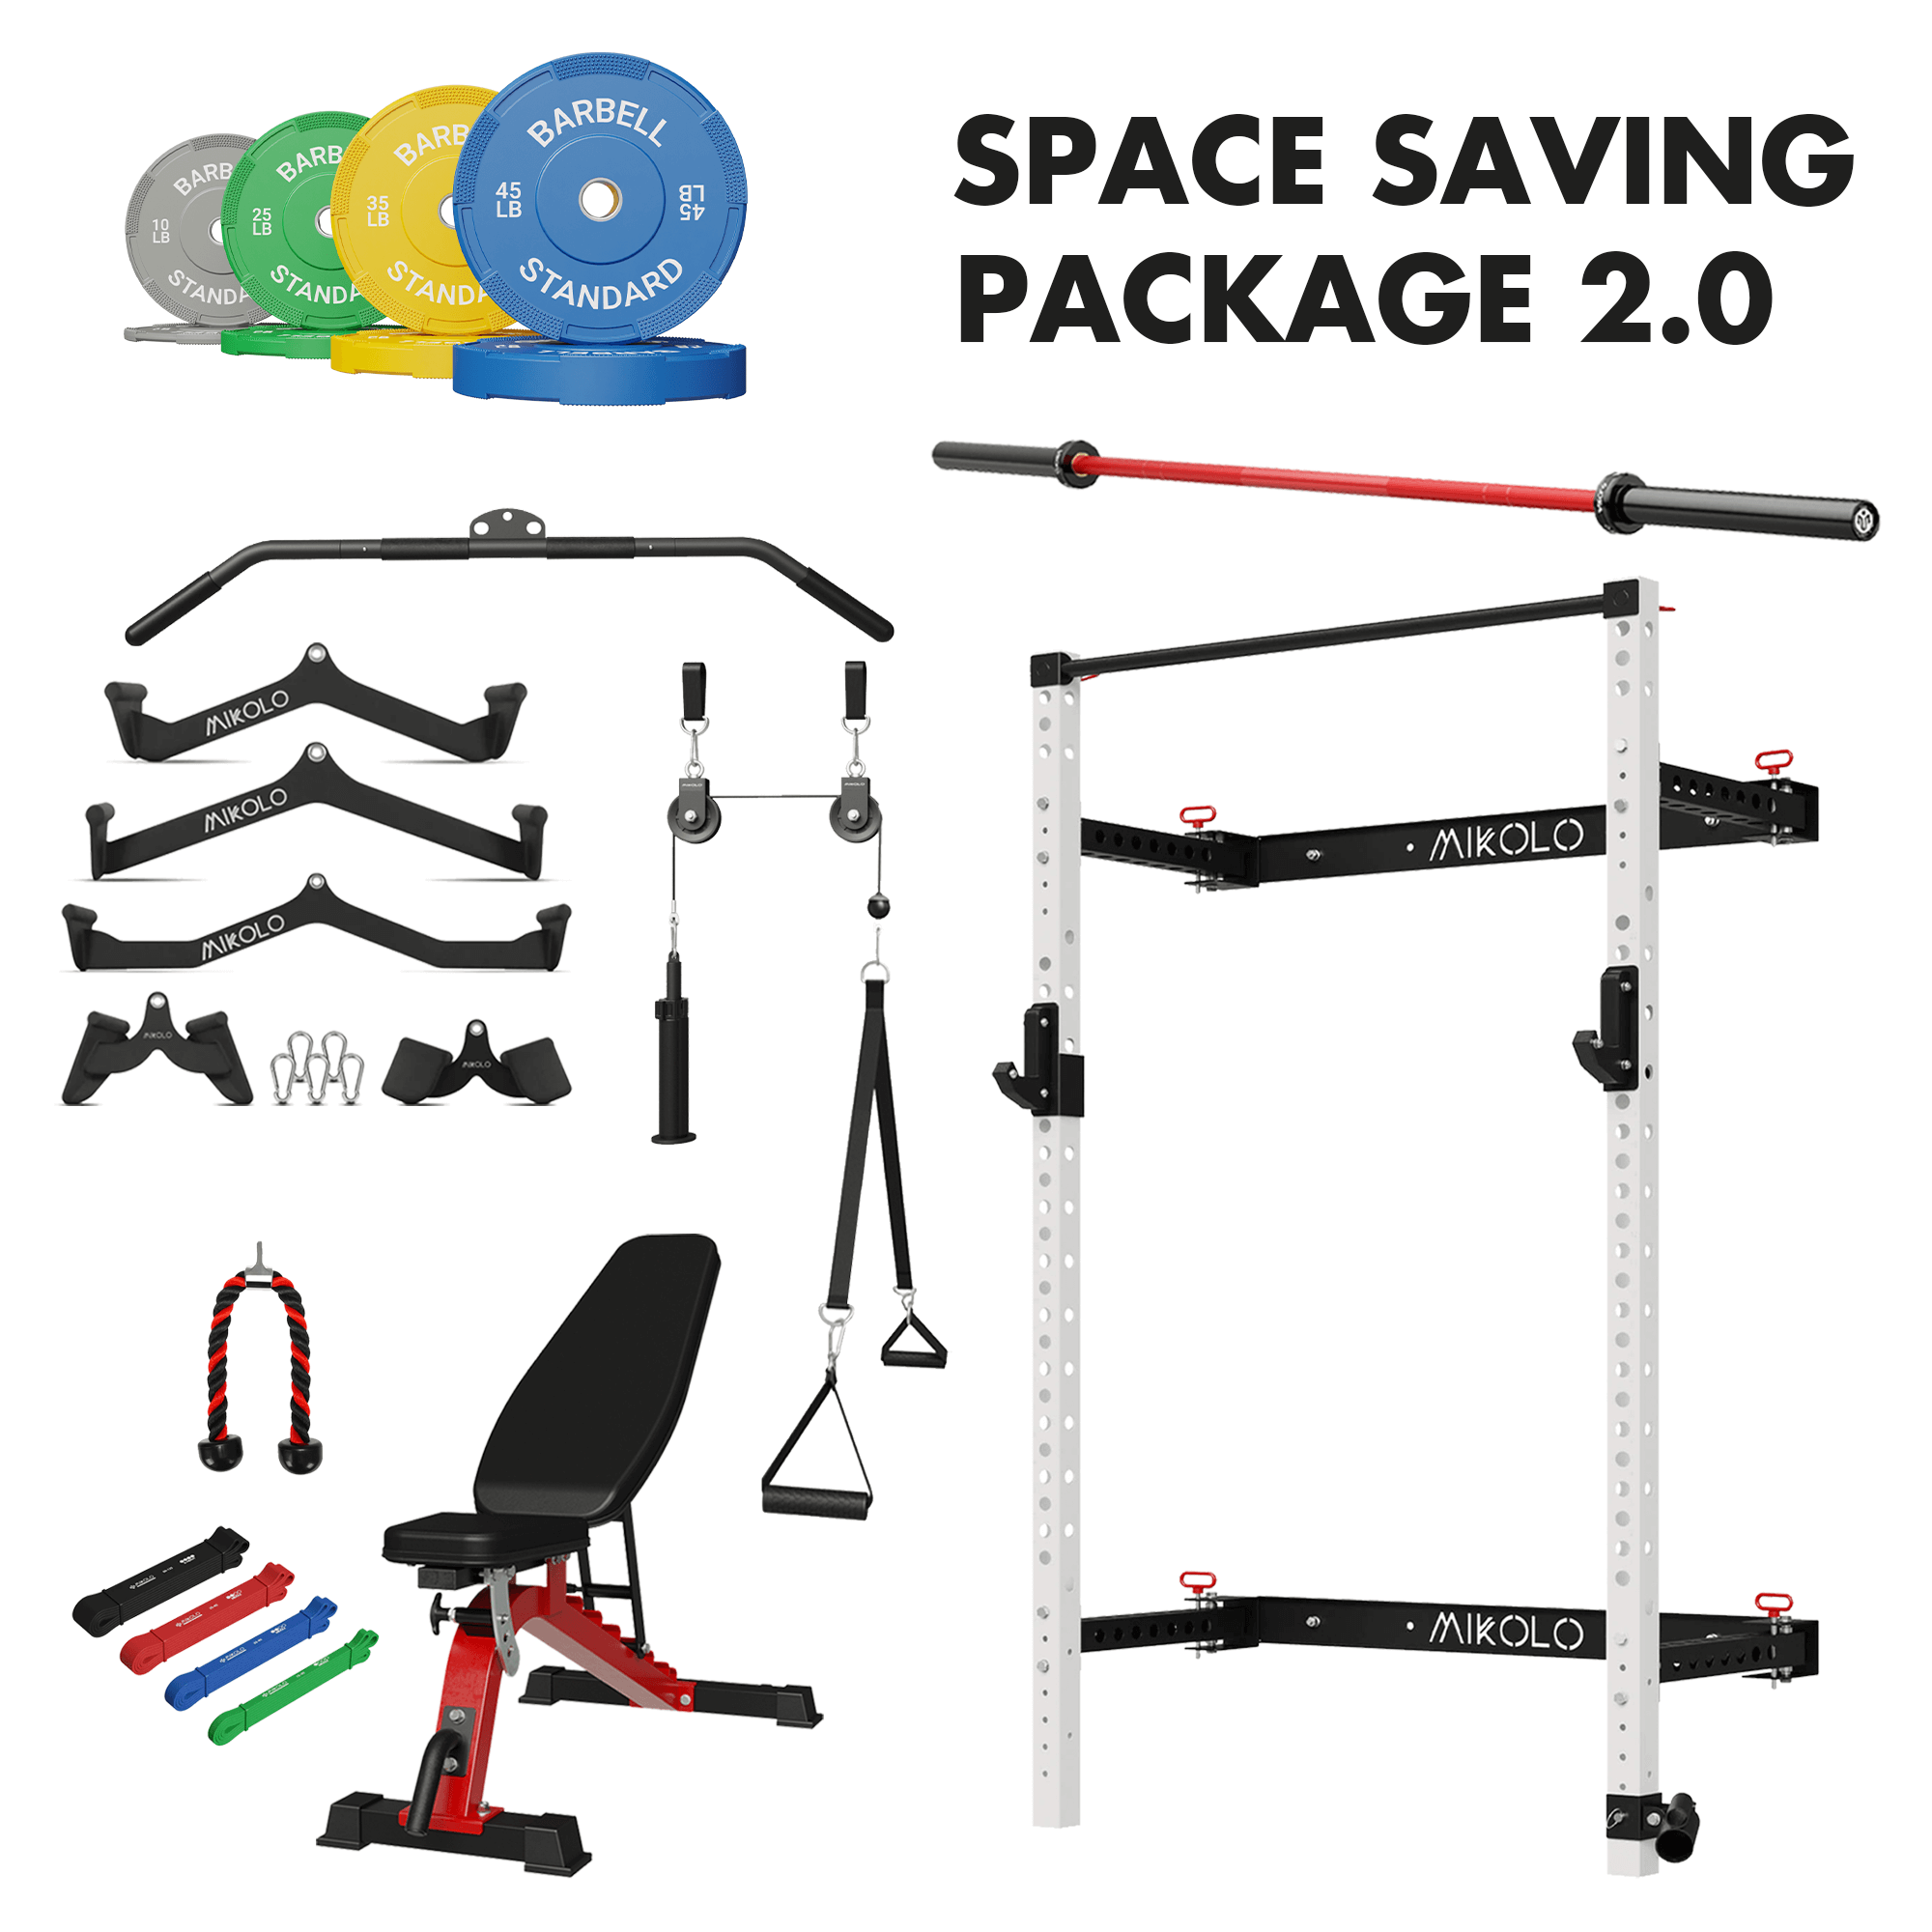 Space Saving Package 2.0